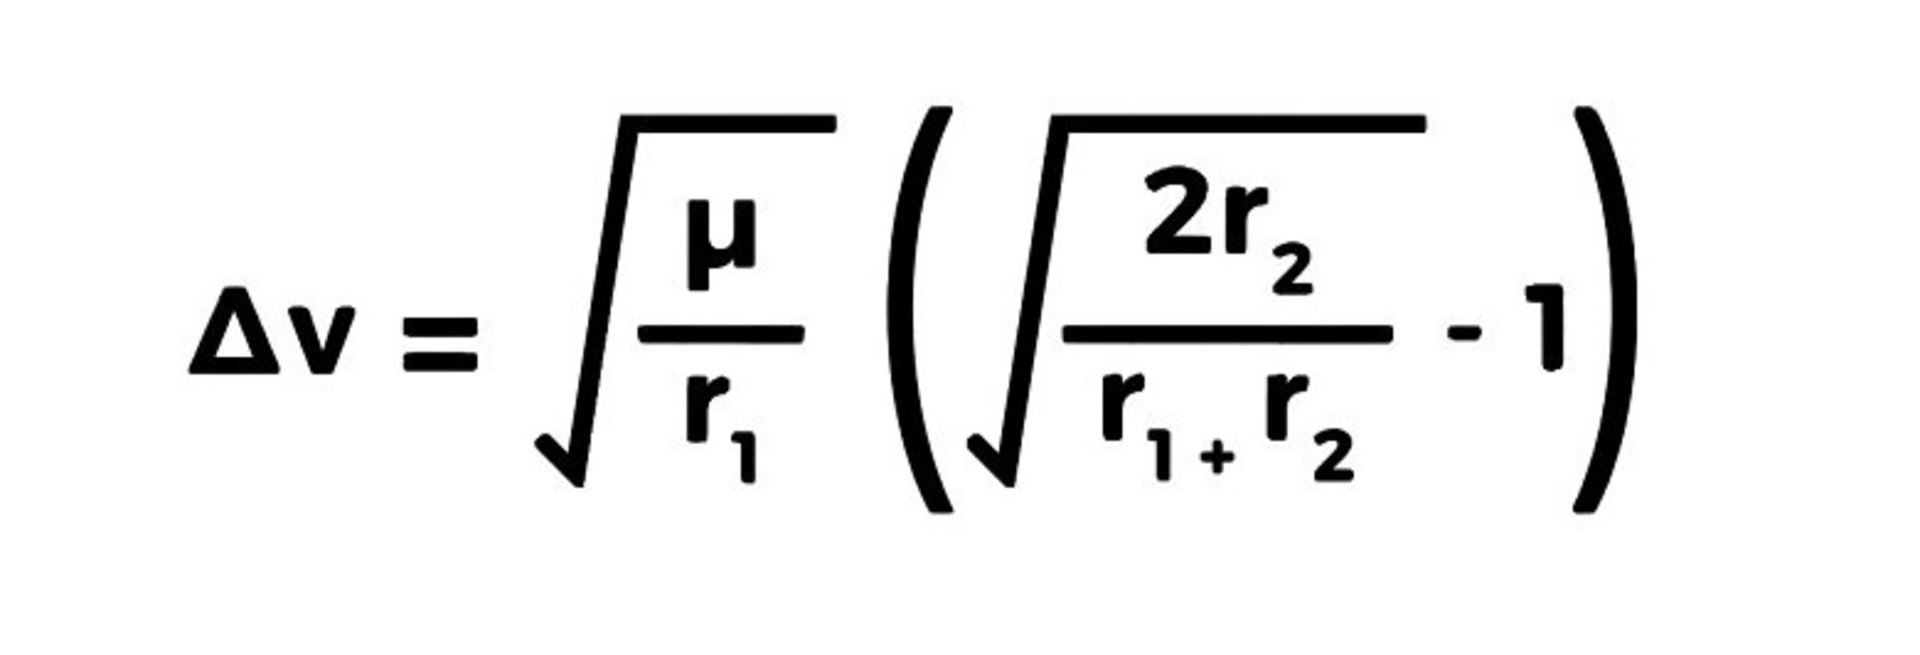 Delta V calculation formula